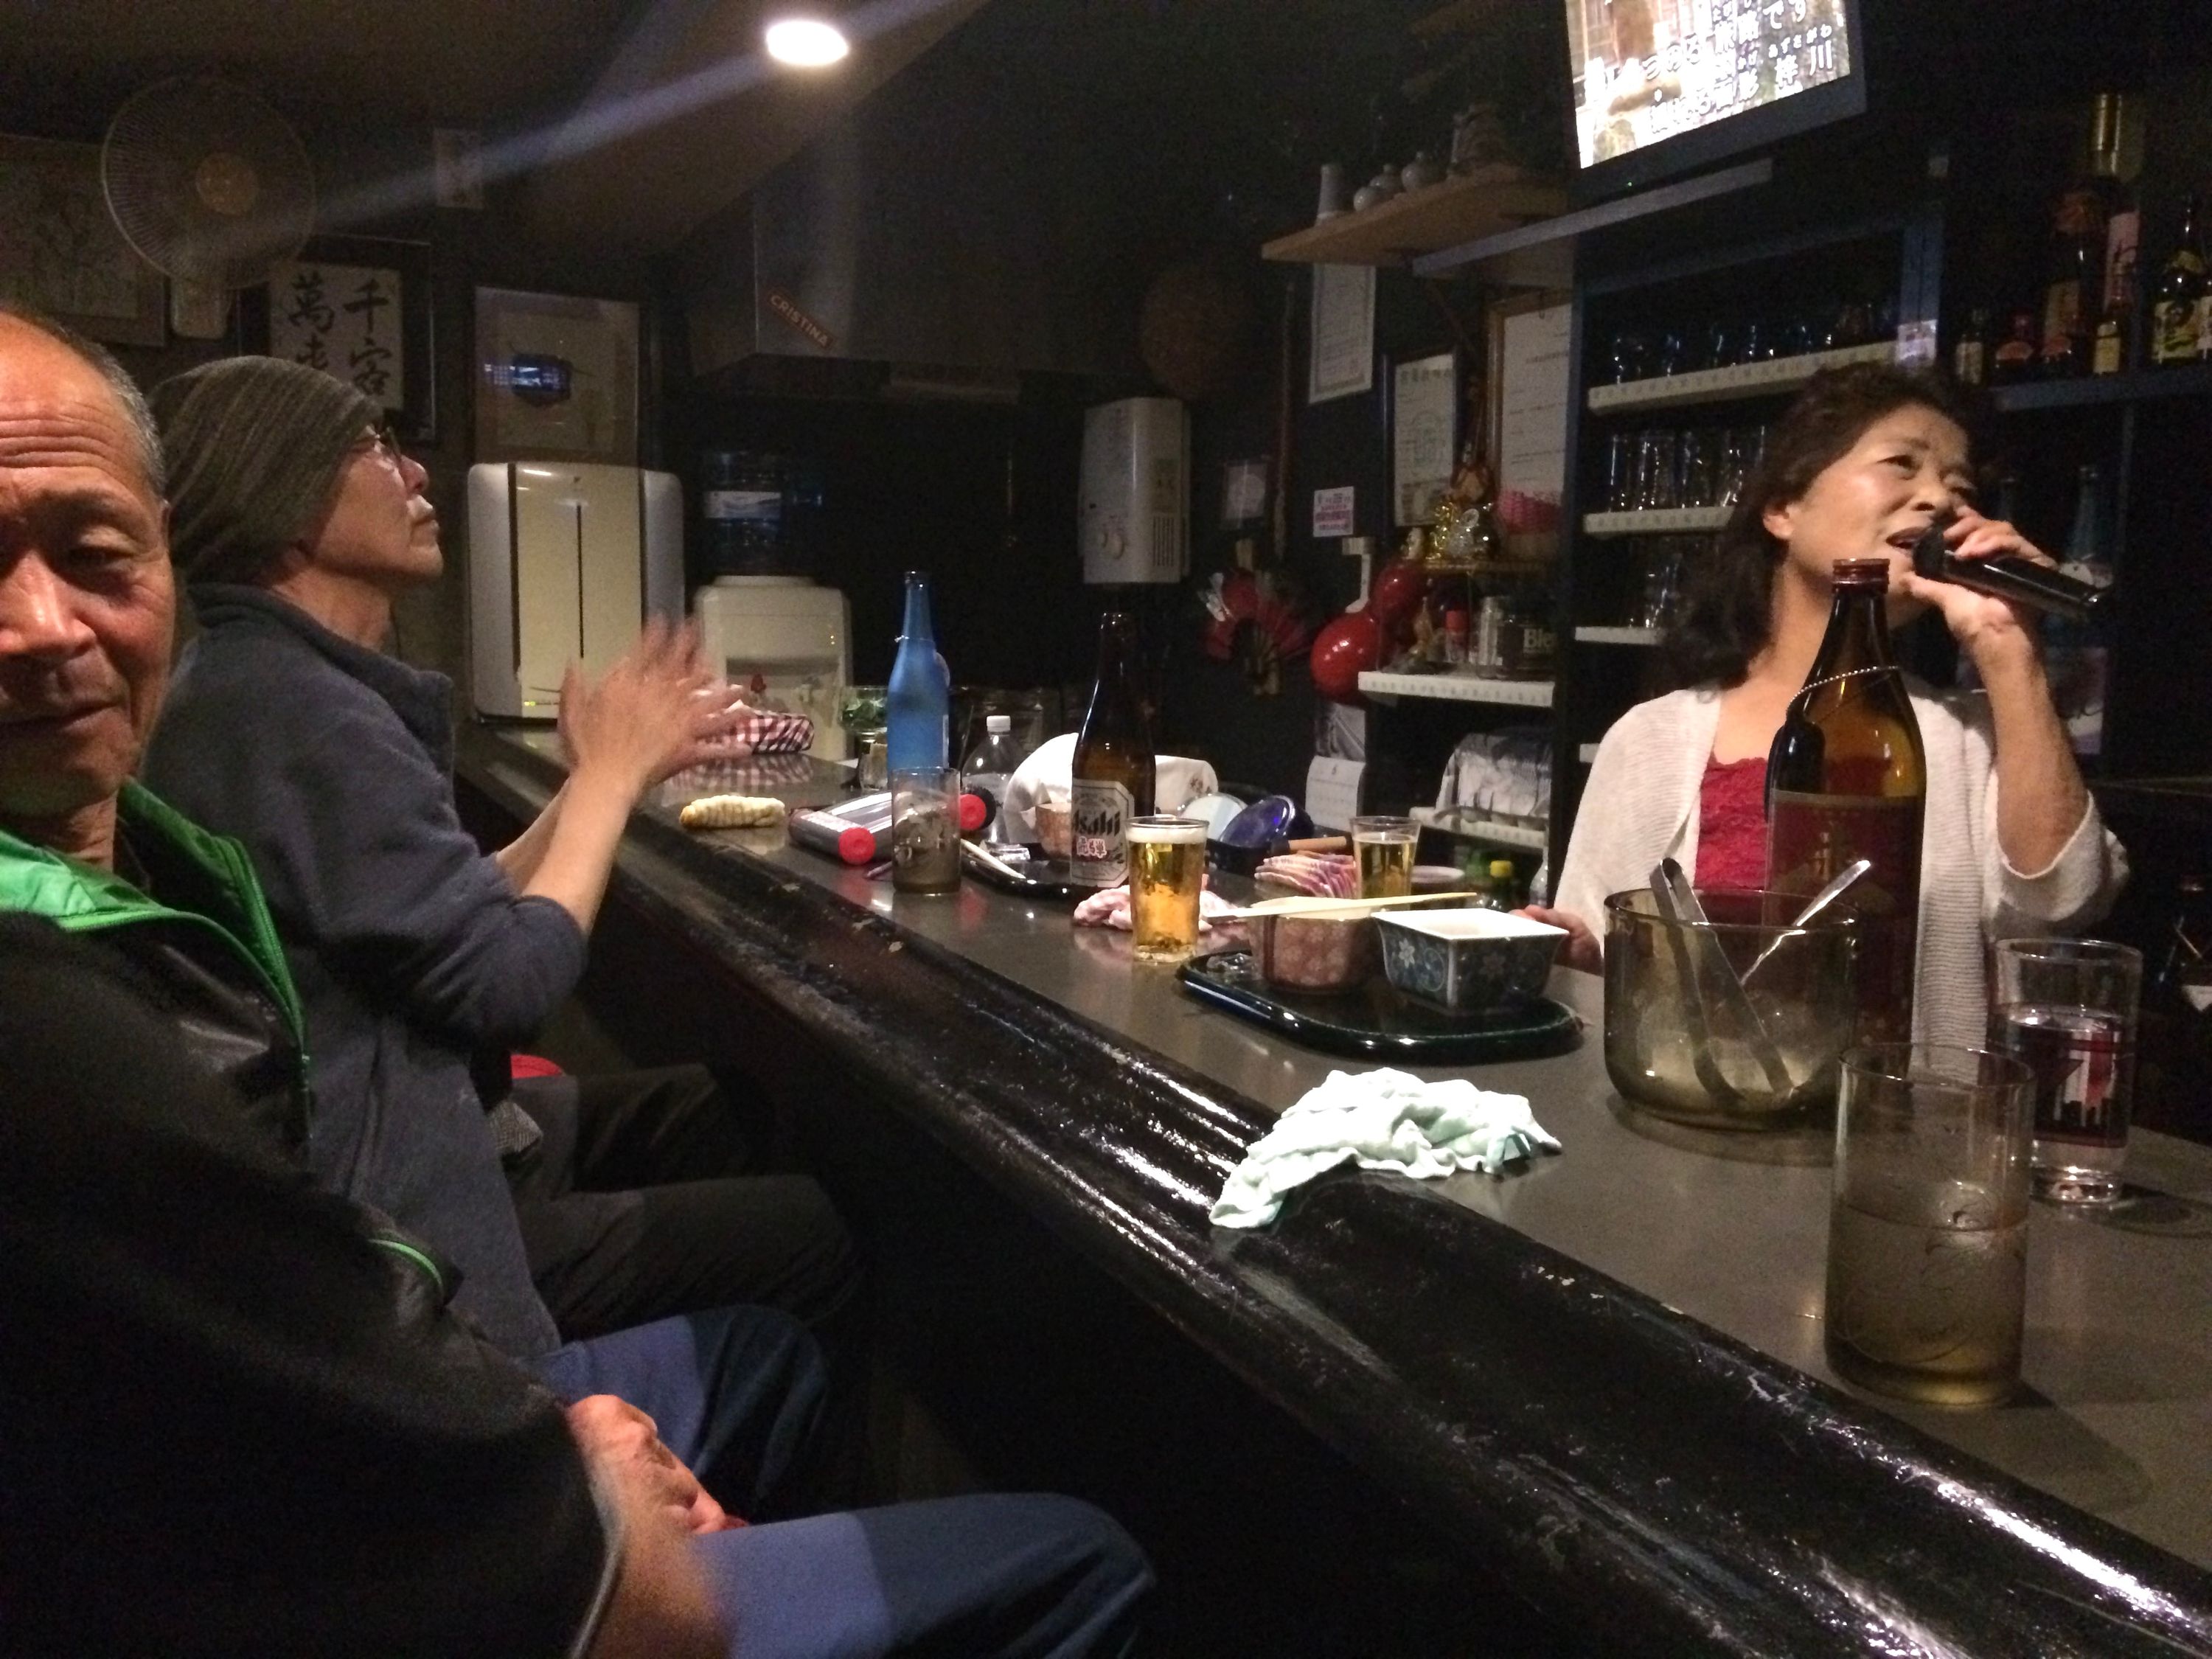 A female bartender sings in a karaoke bar, with male customers looking on.